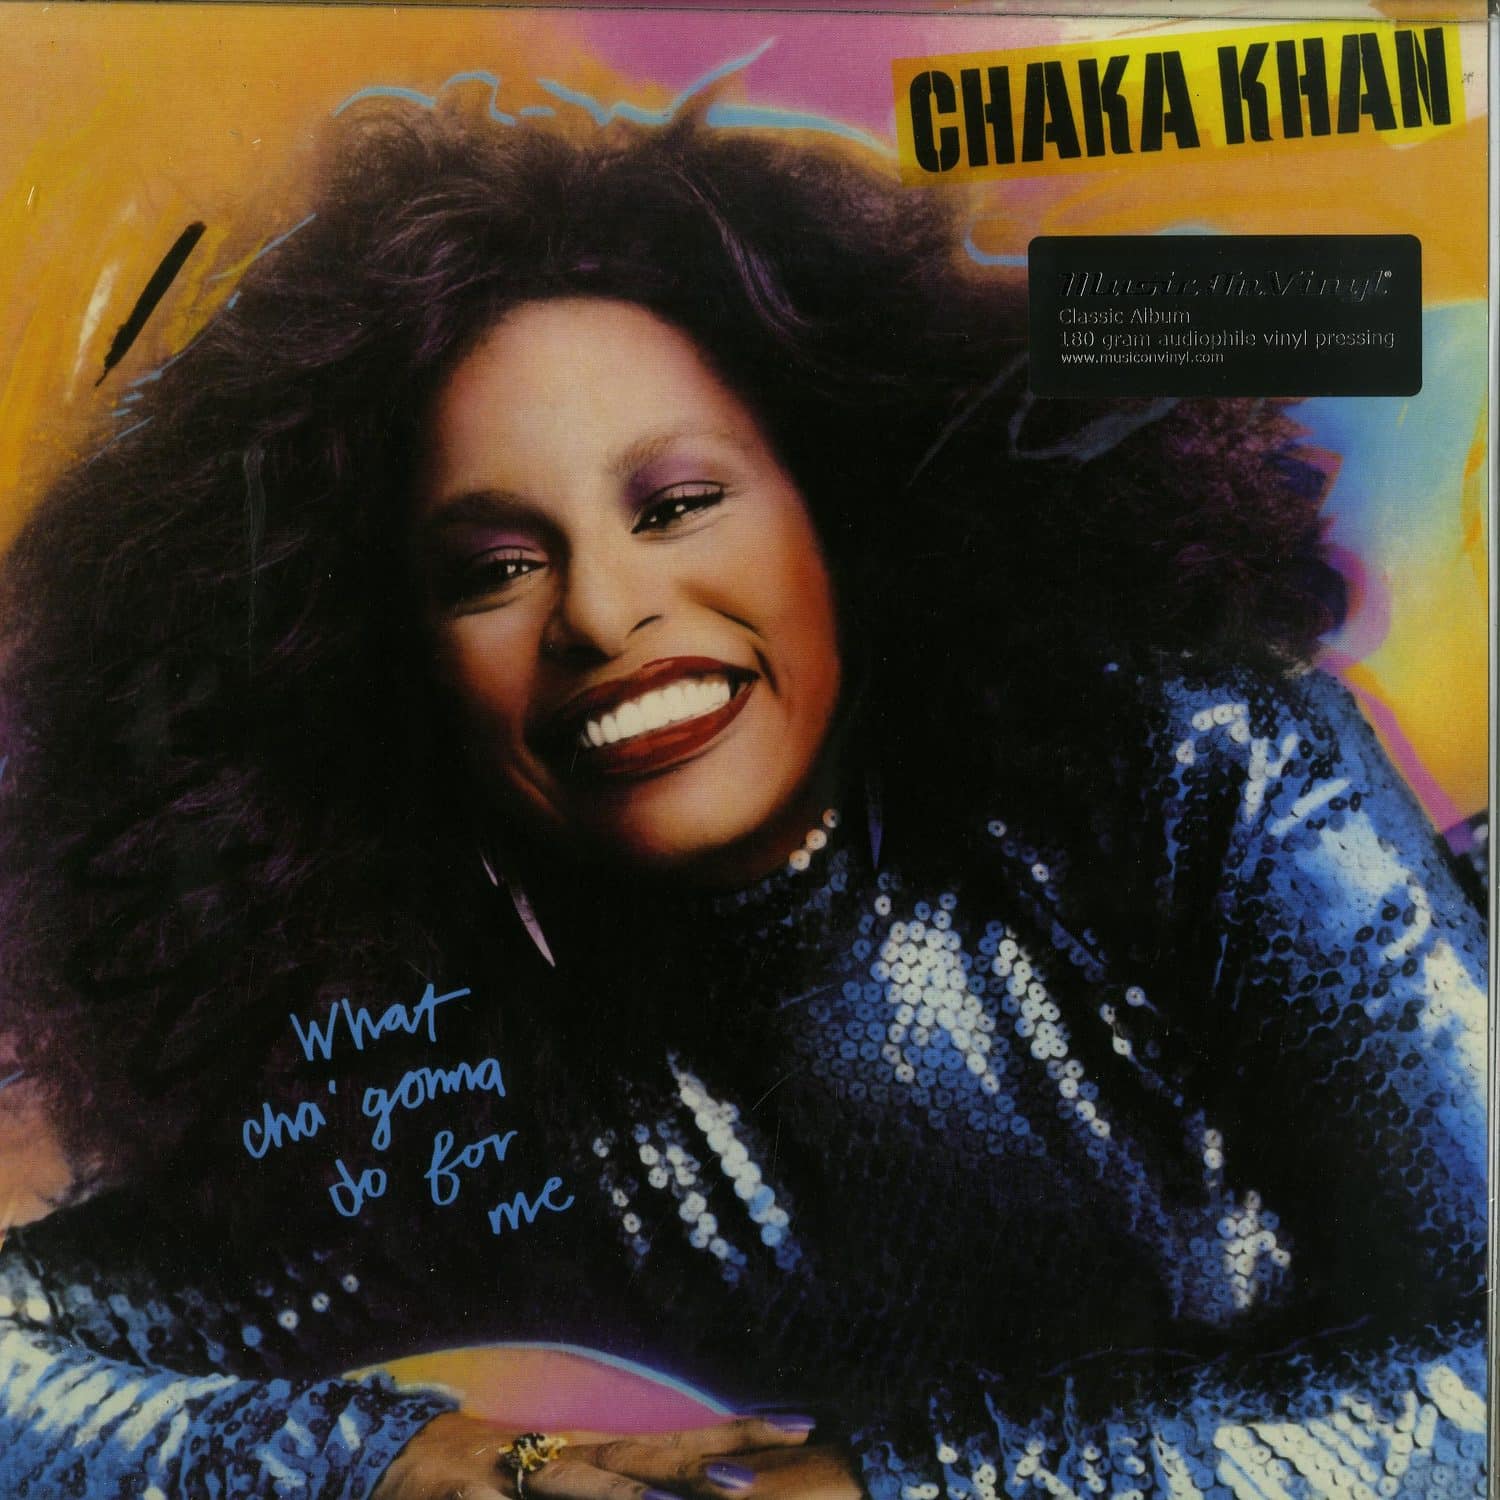 Chaka Khan - WHAT CHA GONNA DO FOR ME 